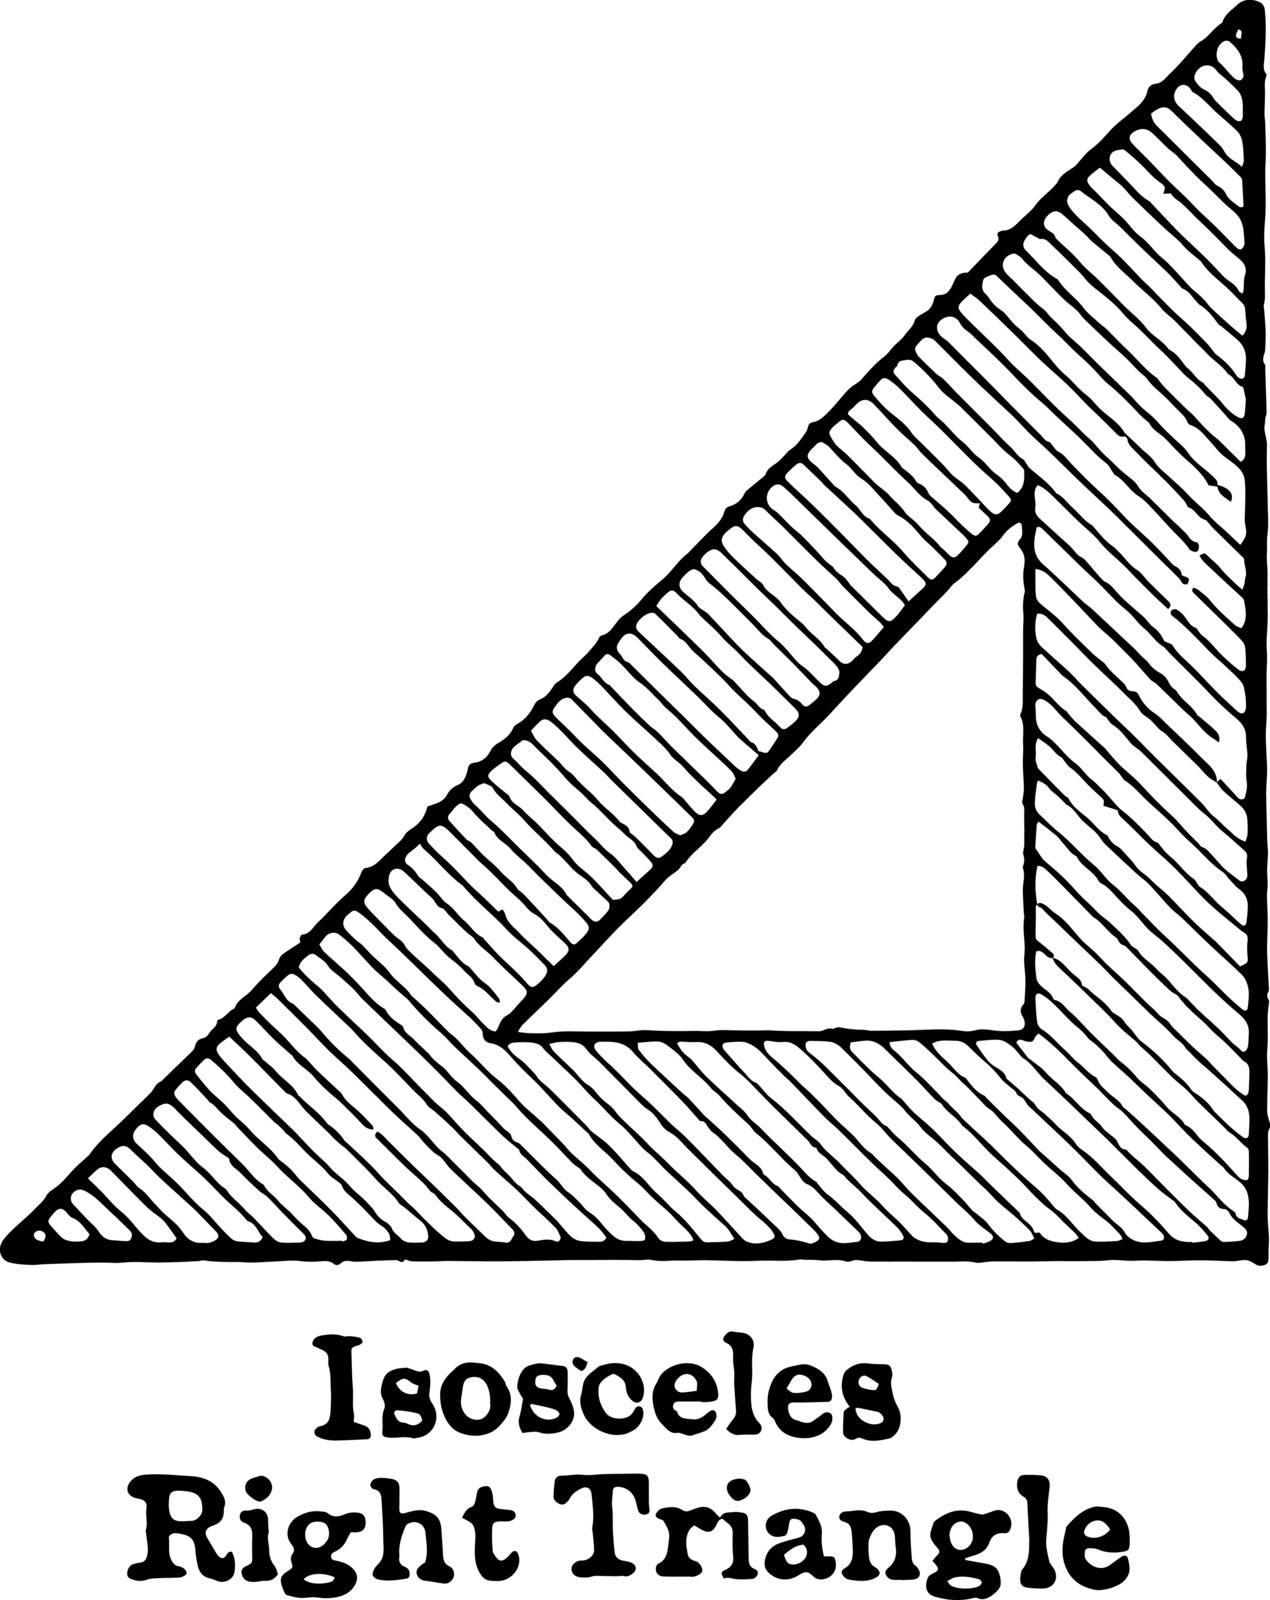 Isosceles Right Triangle vintage illustration.  by Morphart